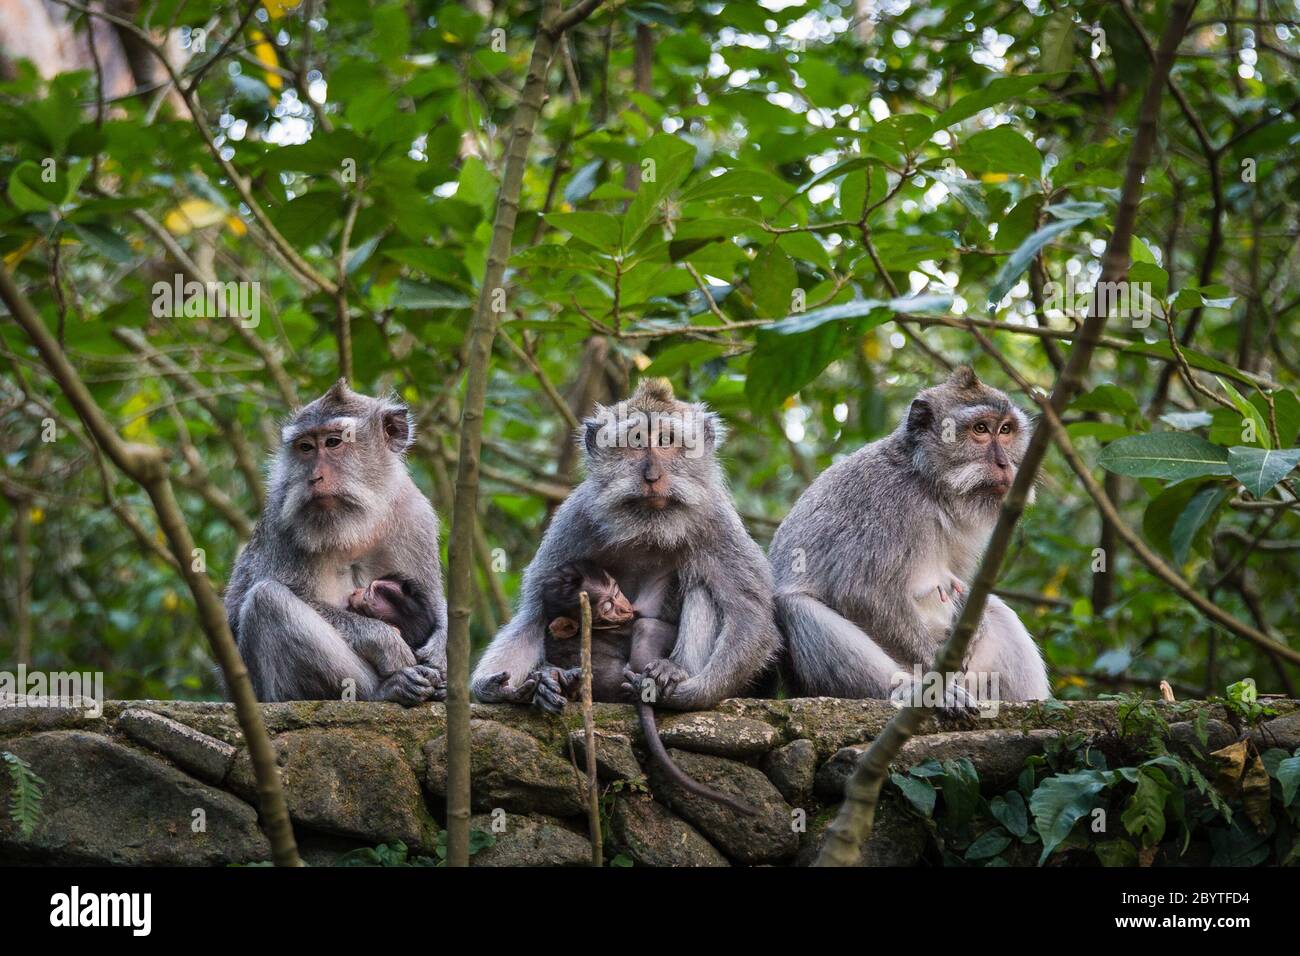 Three mother monkeys sitting together and breastfeeding their babies, UBUD MONKEY FOREST, BALI, INDONESIA Stock Photo